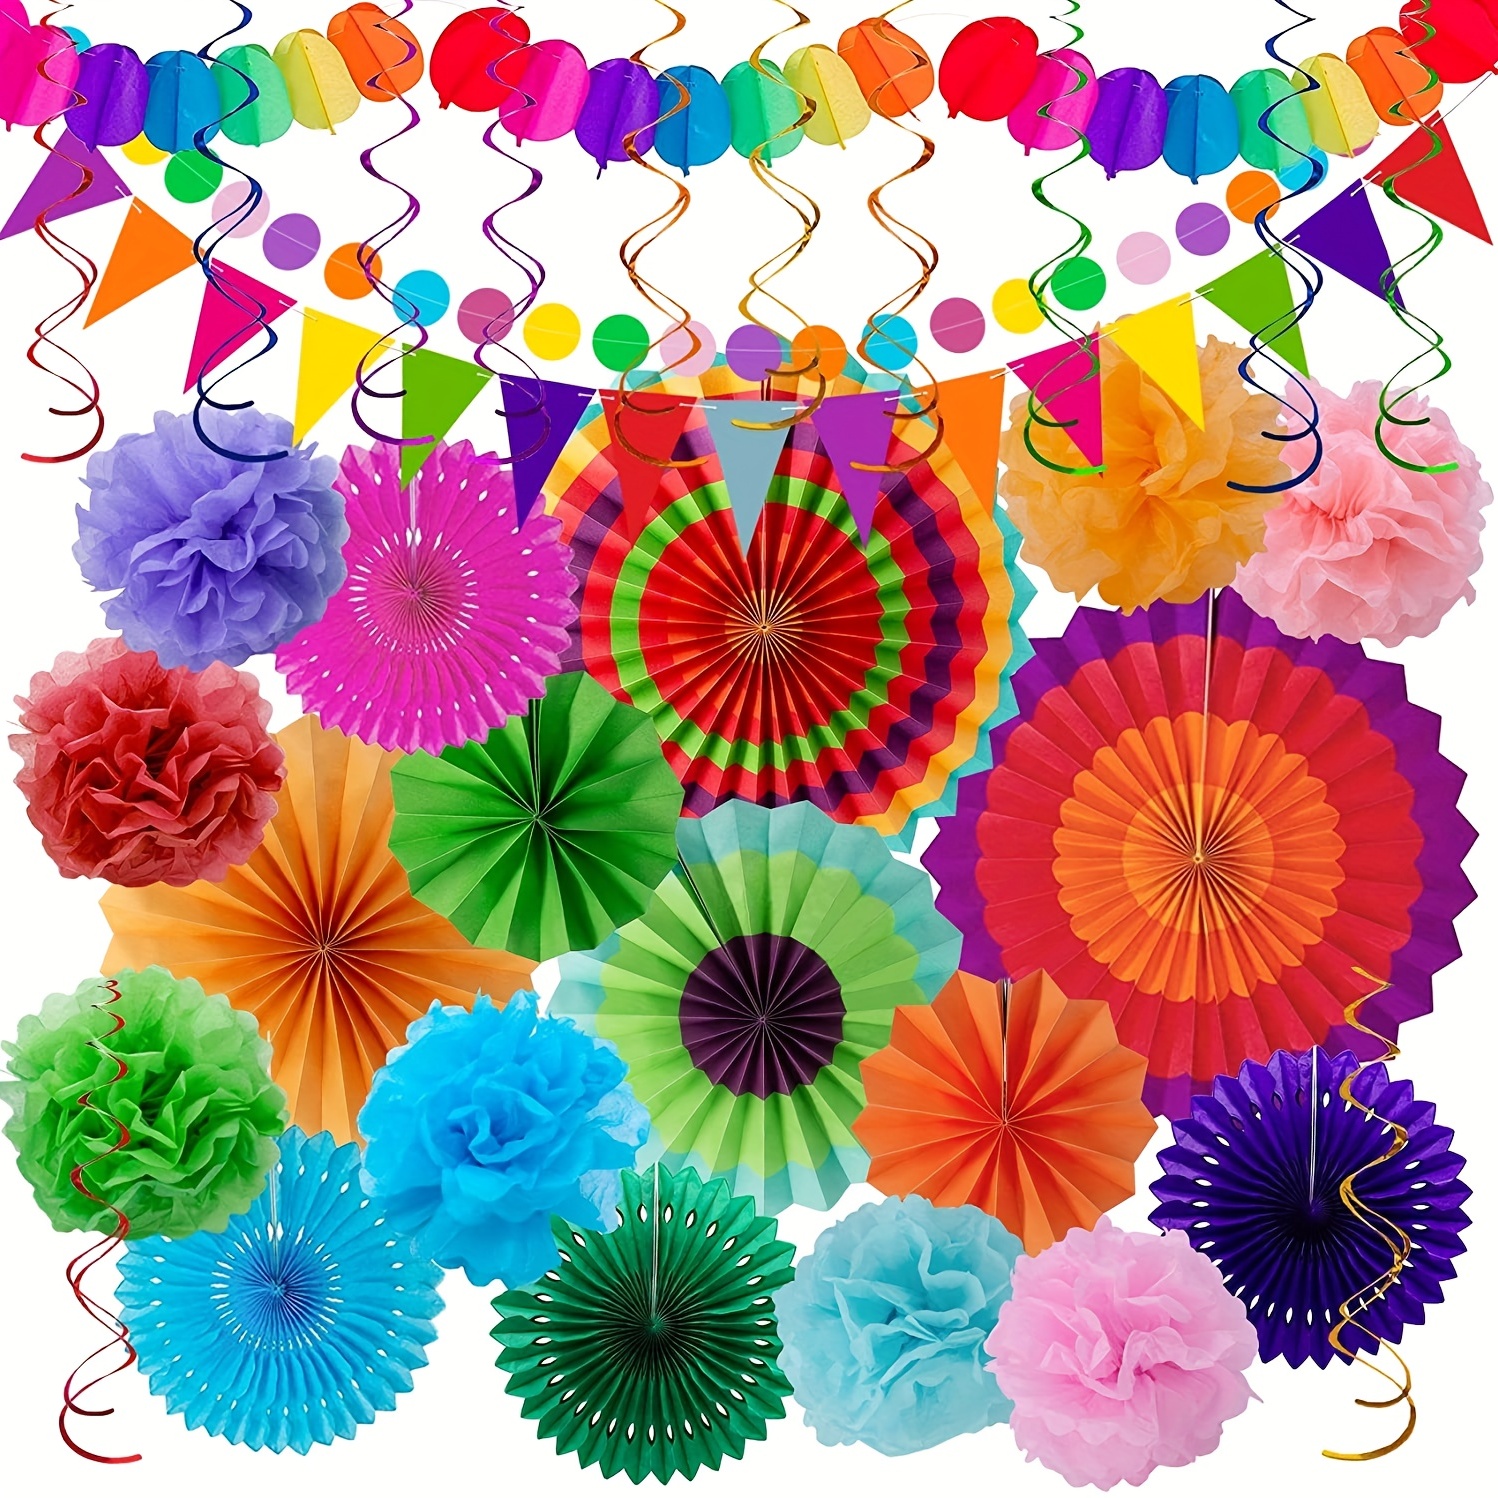 Pin en Balloons Party Decorations, decoración de fiestas con